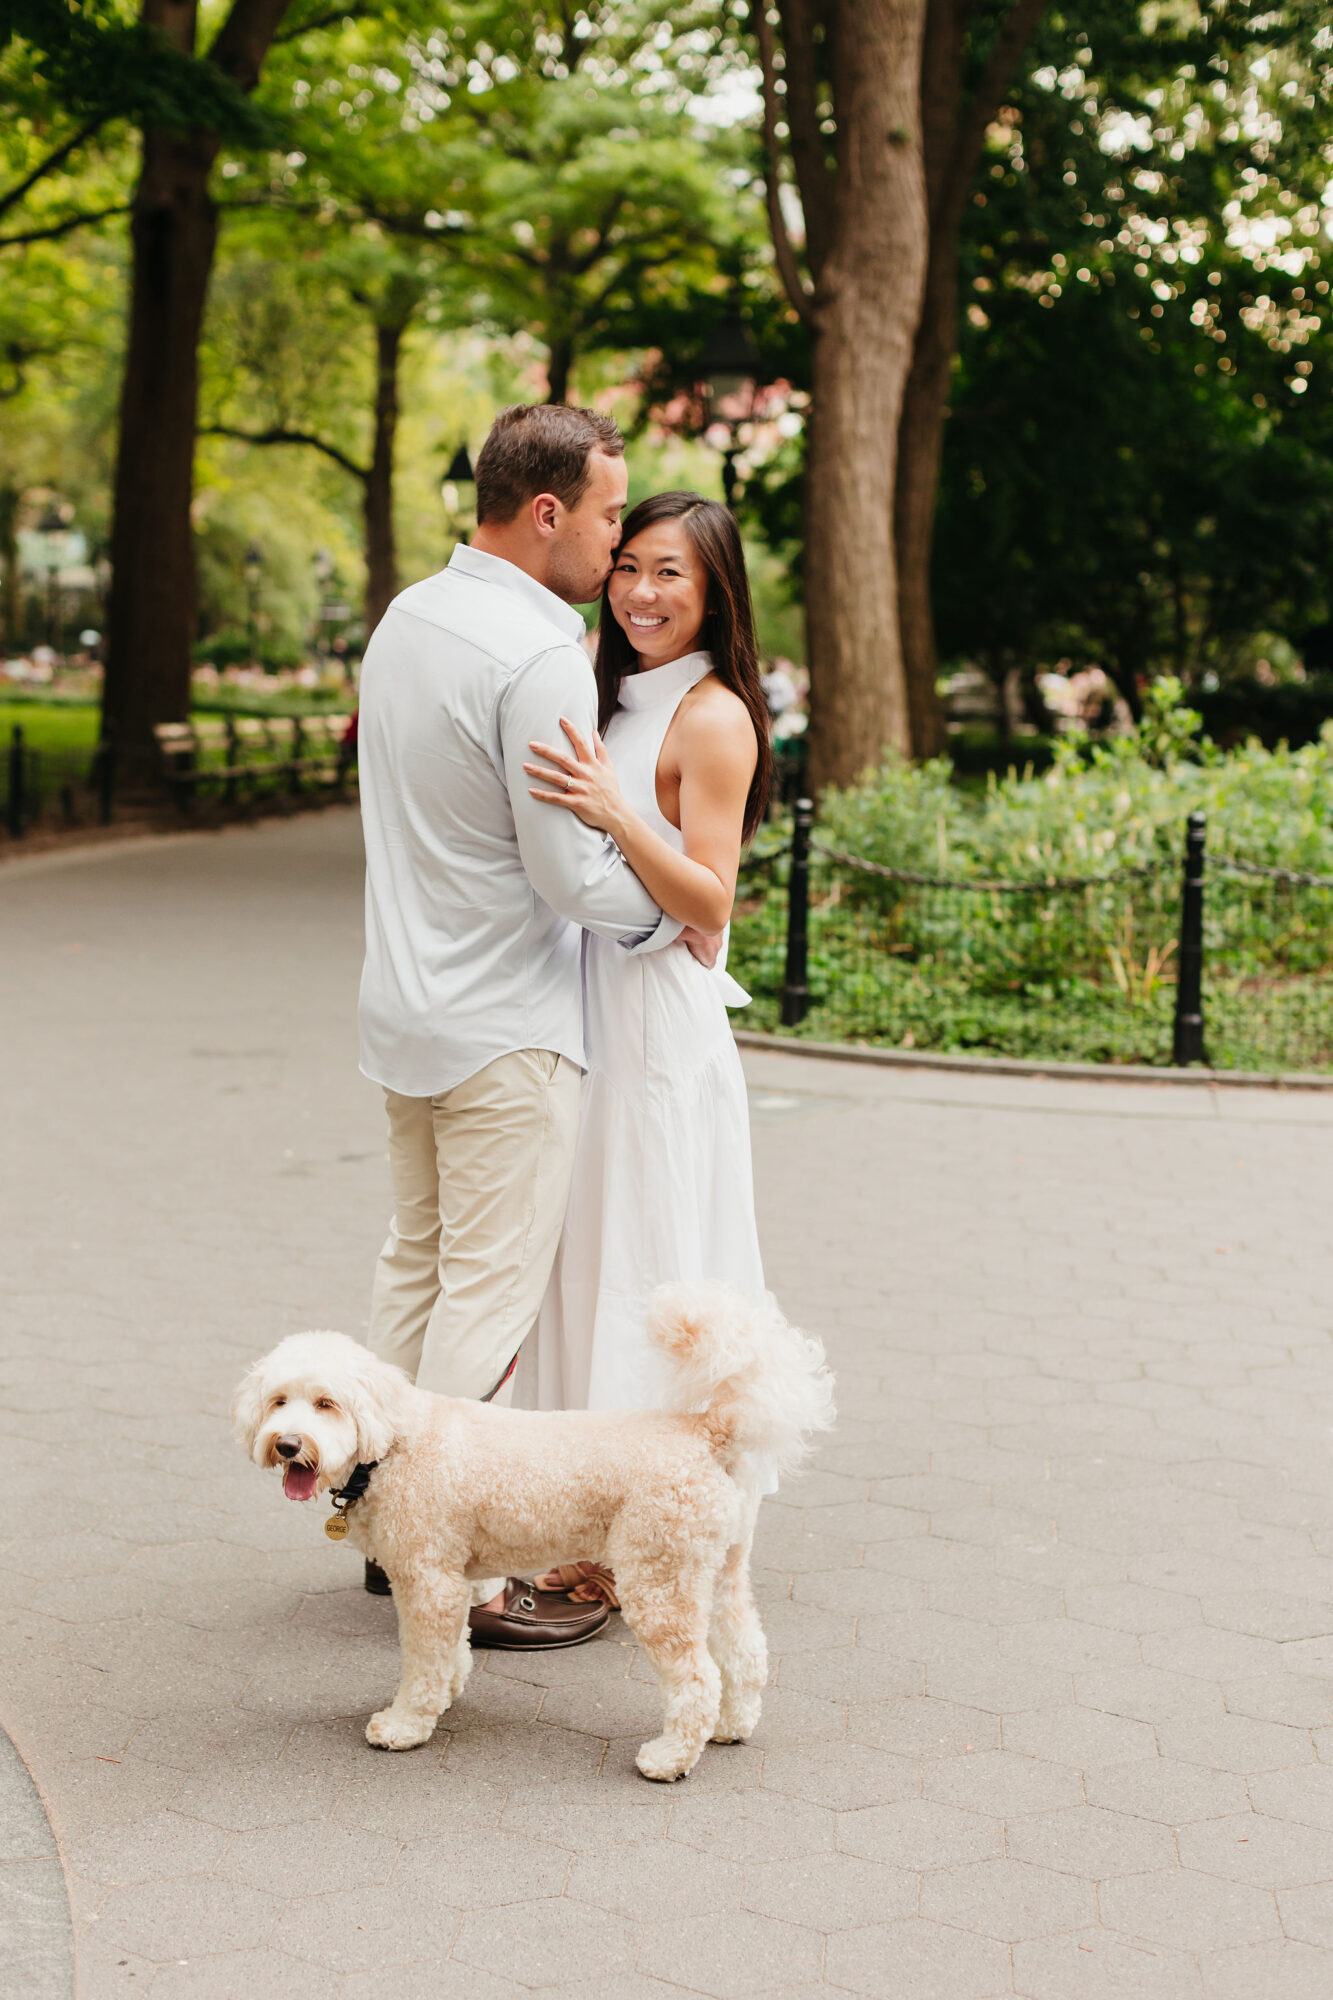 greenwich village, engagement photos, new york city streets, white dress, washington square park, dog